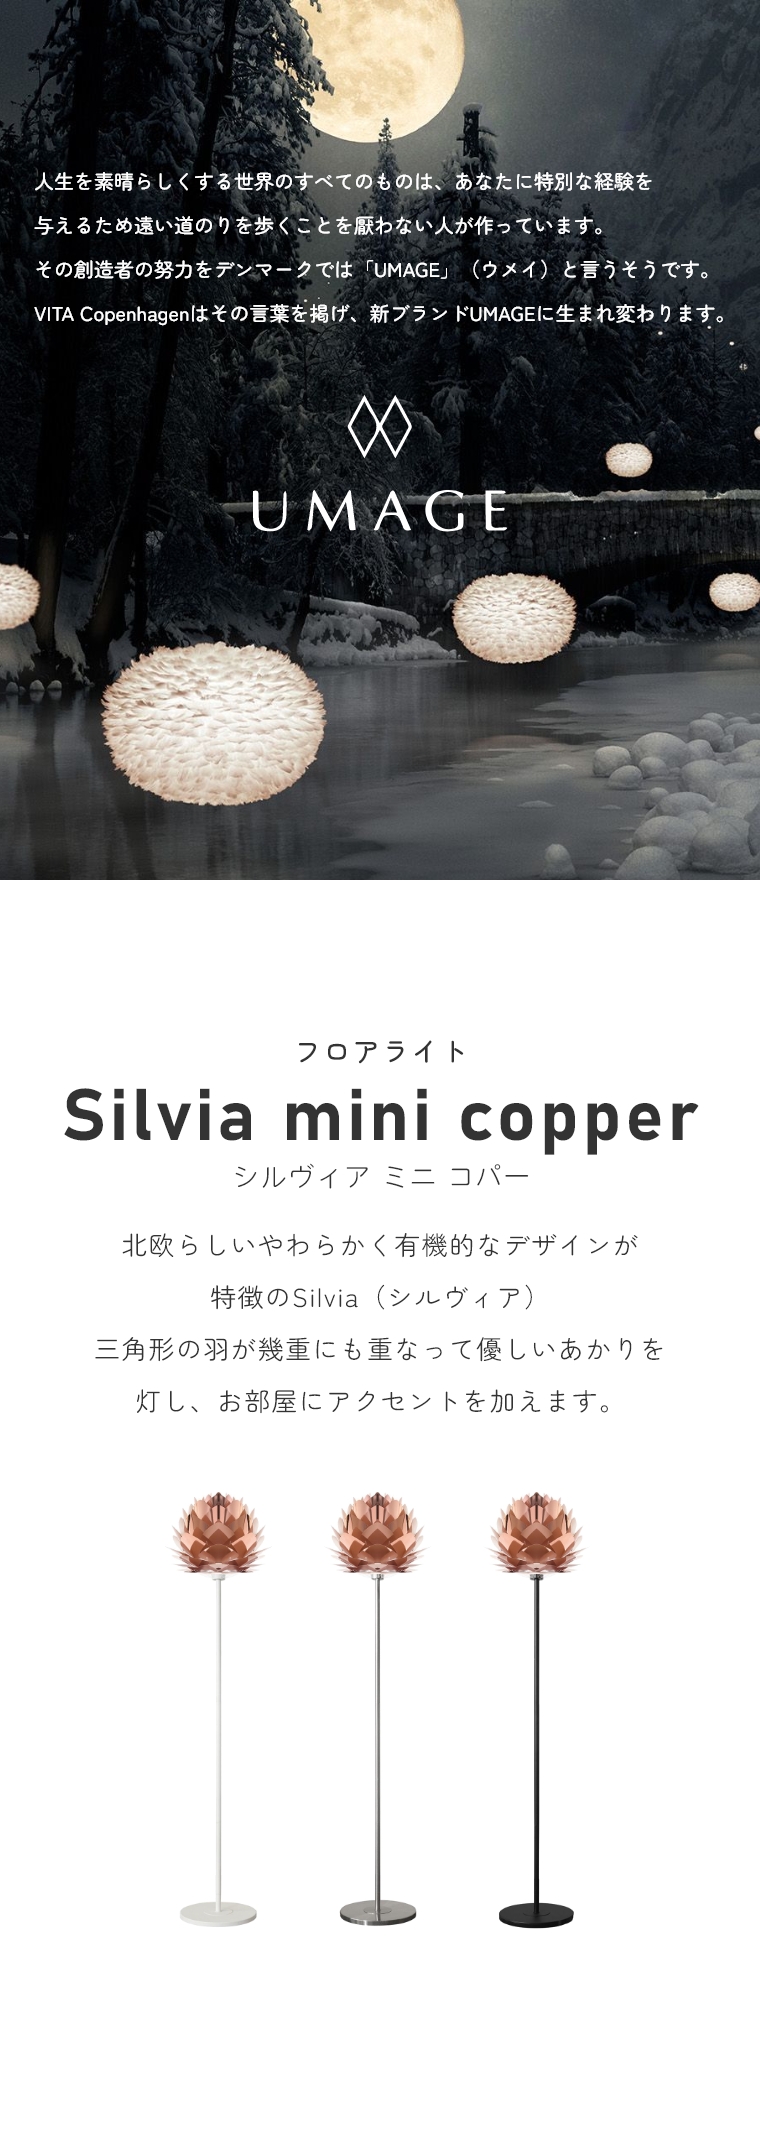 keCXg̃VvȃCg UMAGE(EC) Silvia mini copper (VBA ~j Rp[) tACg 2030 GbNX